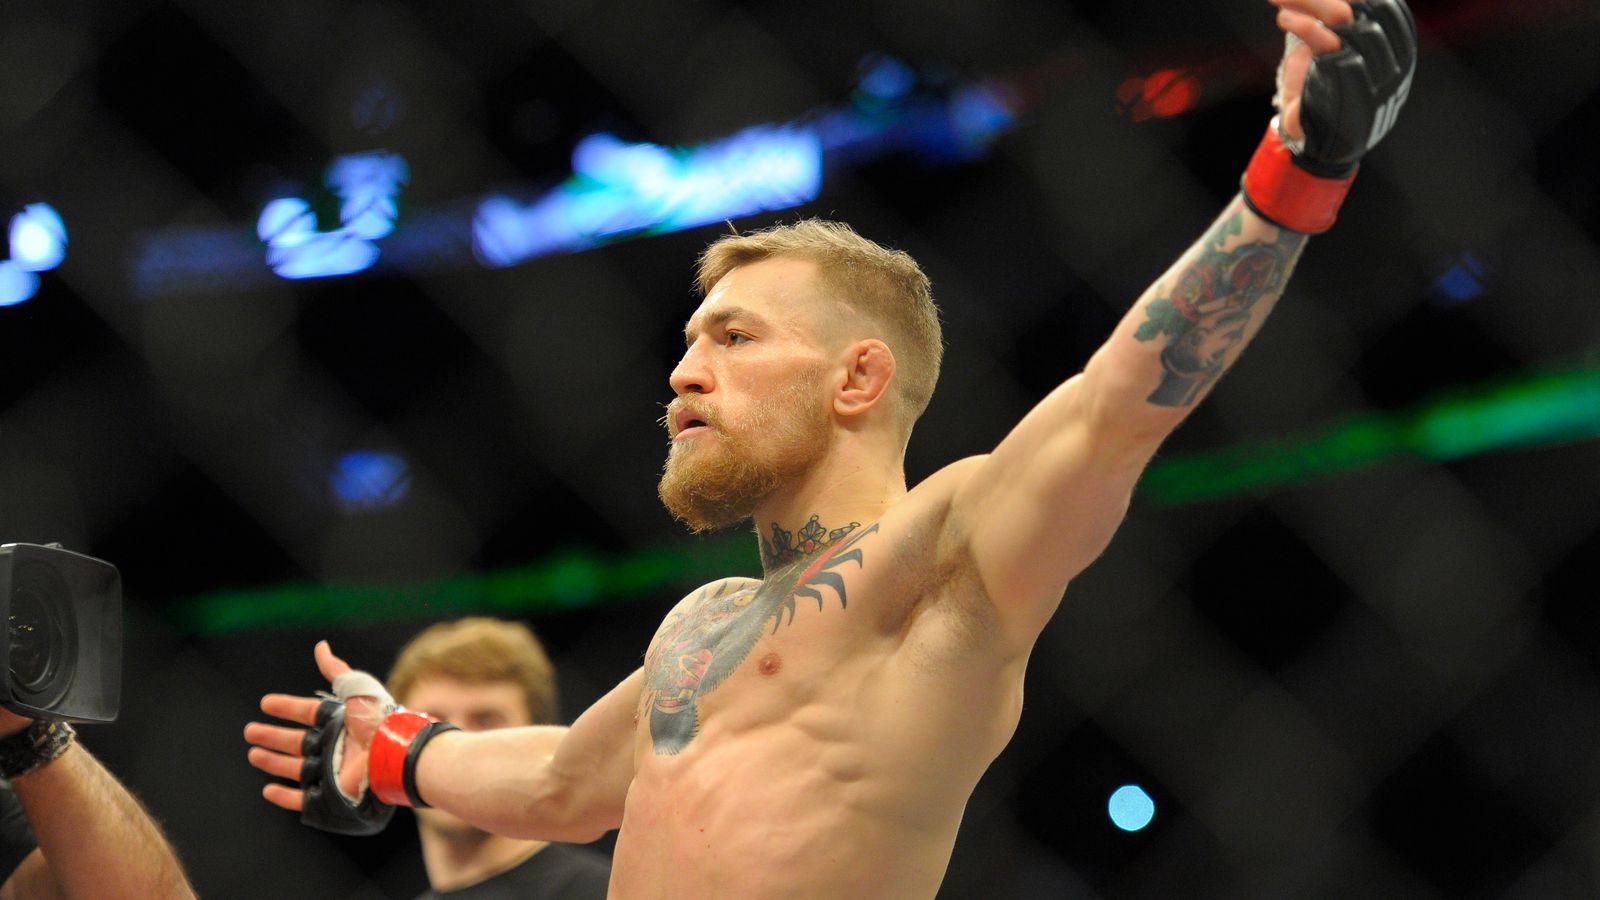 Jose Aldo vs. Conor McGregor video: UFC 189 promo released for July 11